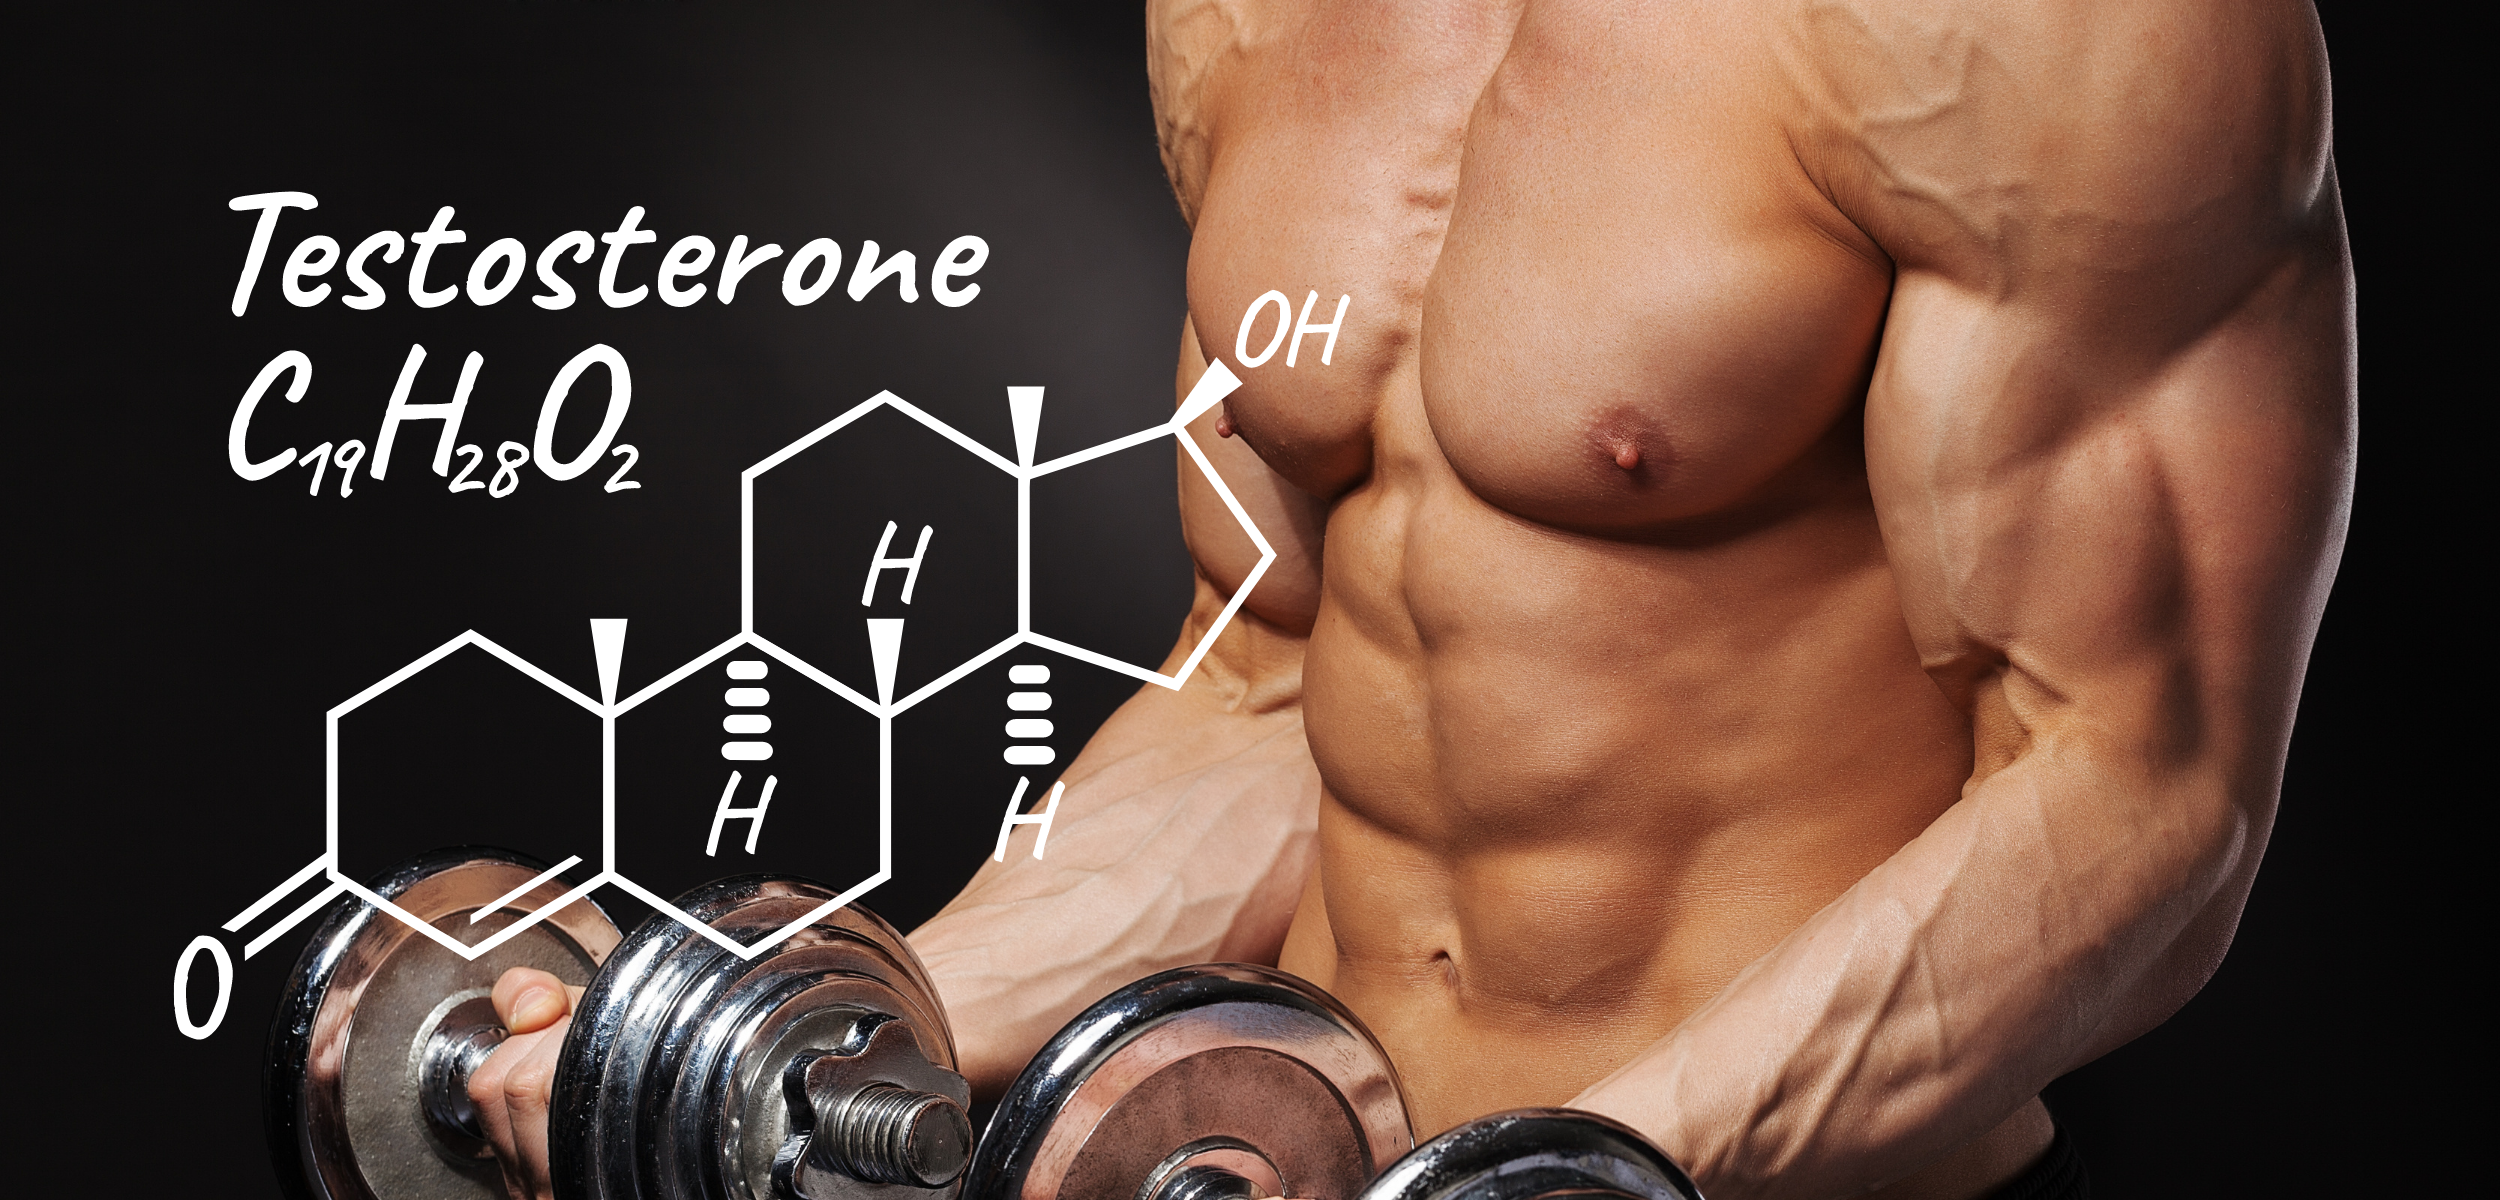 6 Claves Para Incrementar tus Niveles de Testosterona Naturalmente